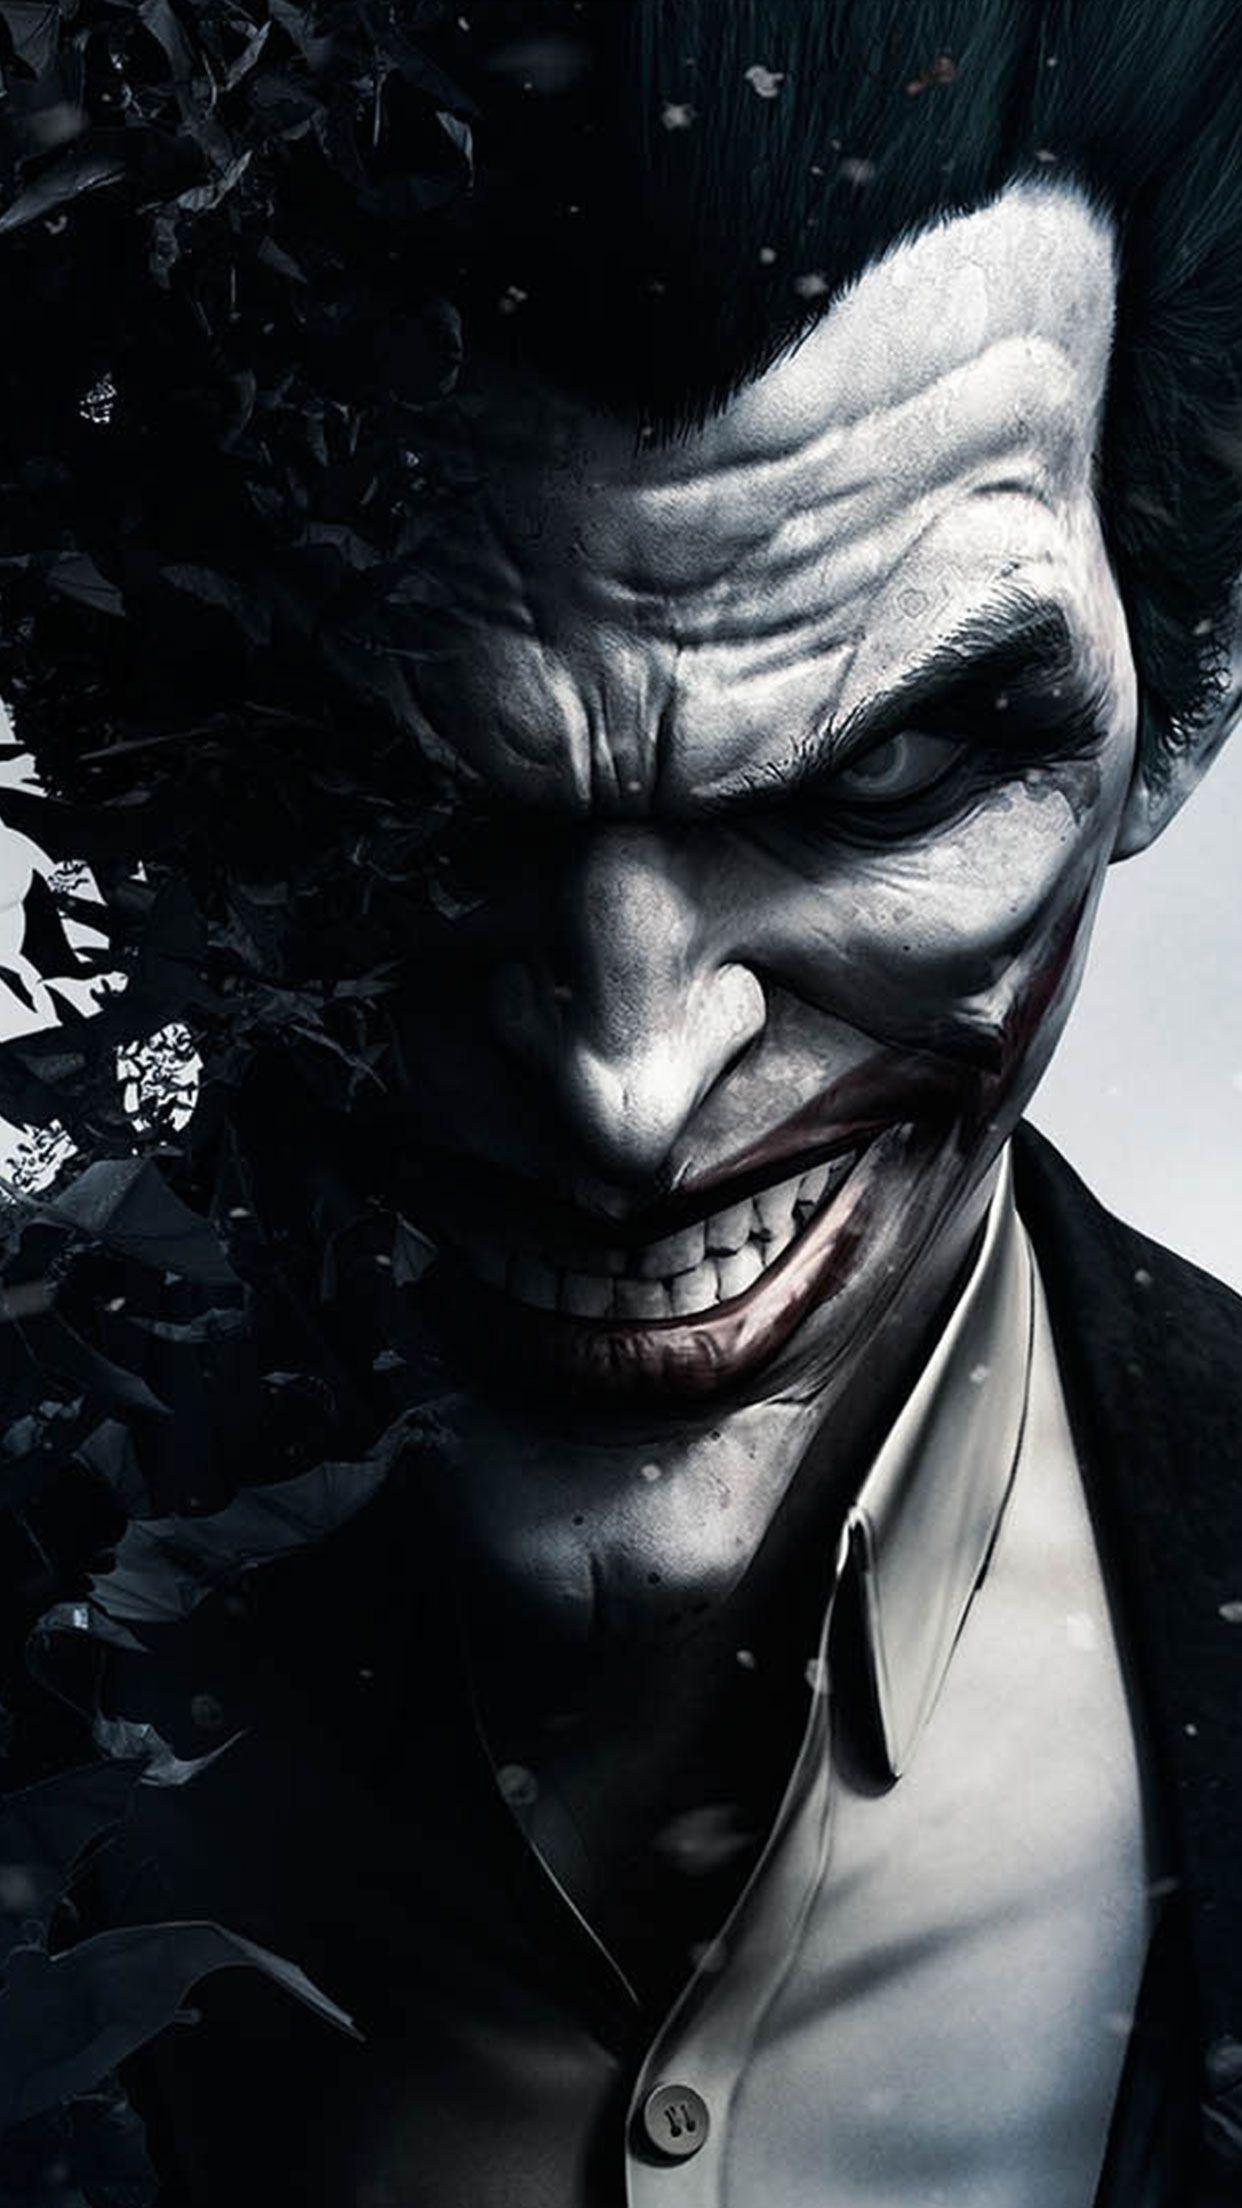 Movie star Joker in red jacket smoking in front of black background 2K  wallpaper download